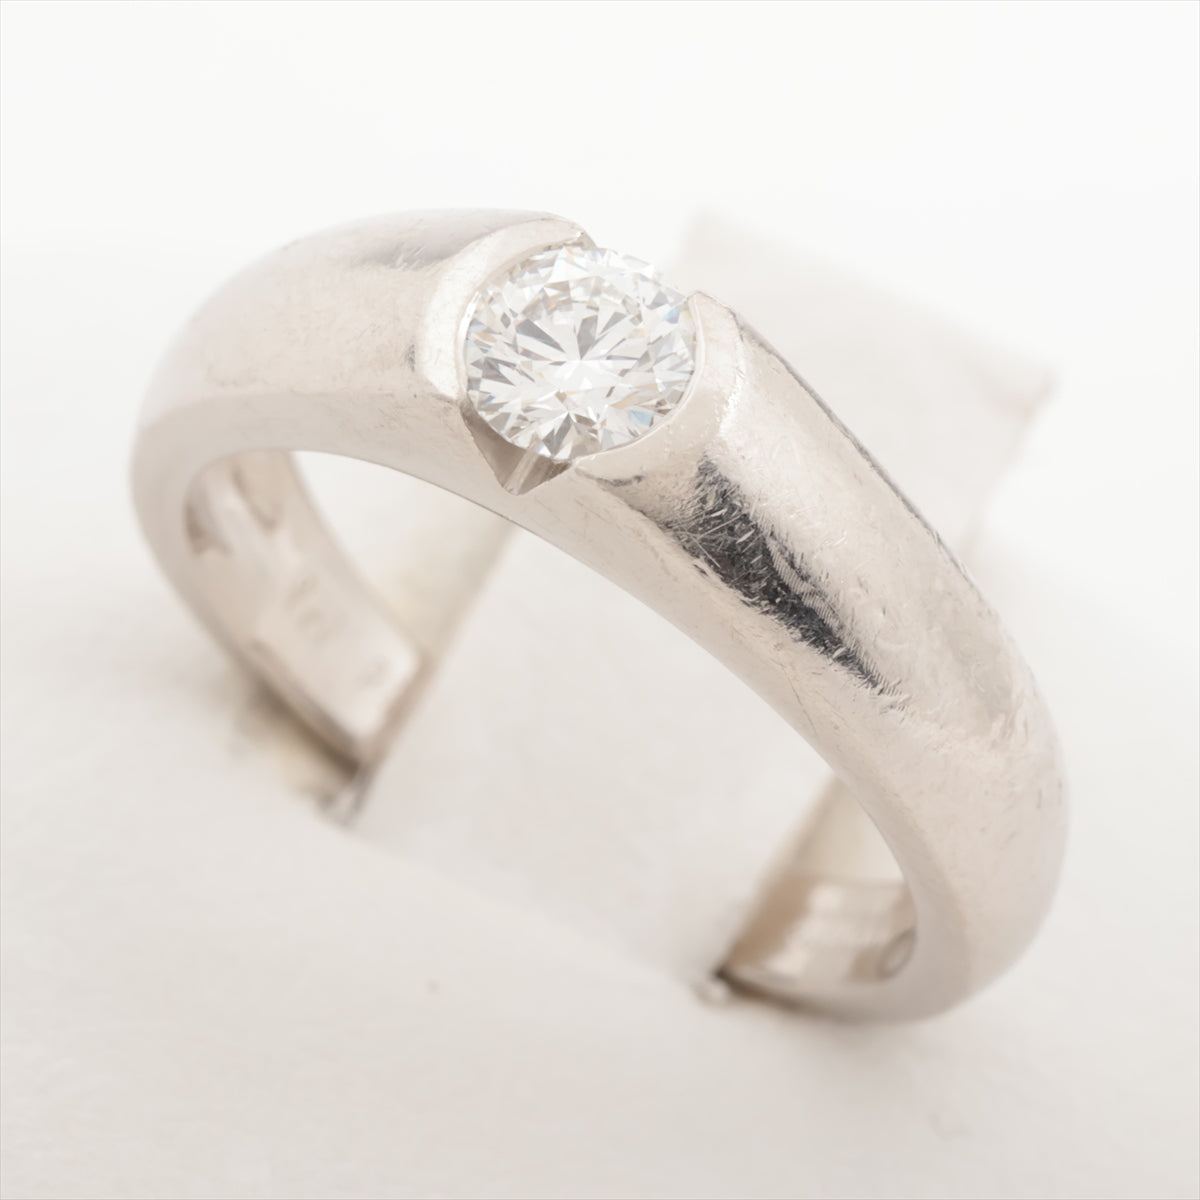 Chaumet Fidelite diamond rings Pt950 6.7g Diamond diameter approx. 4.50mm